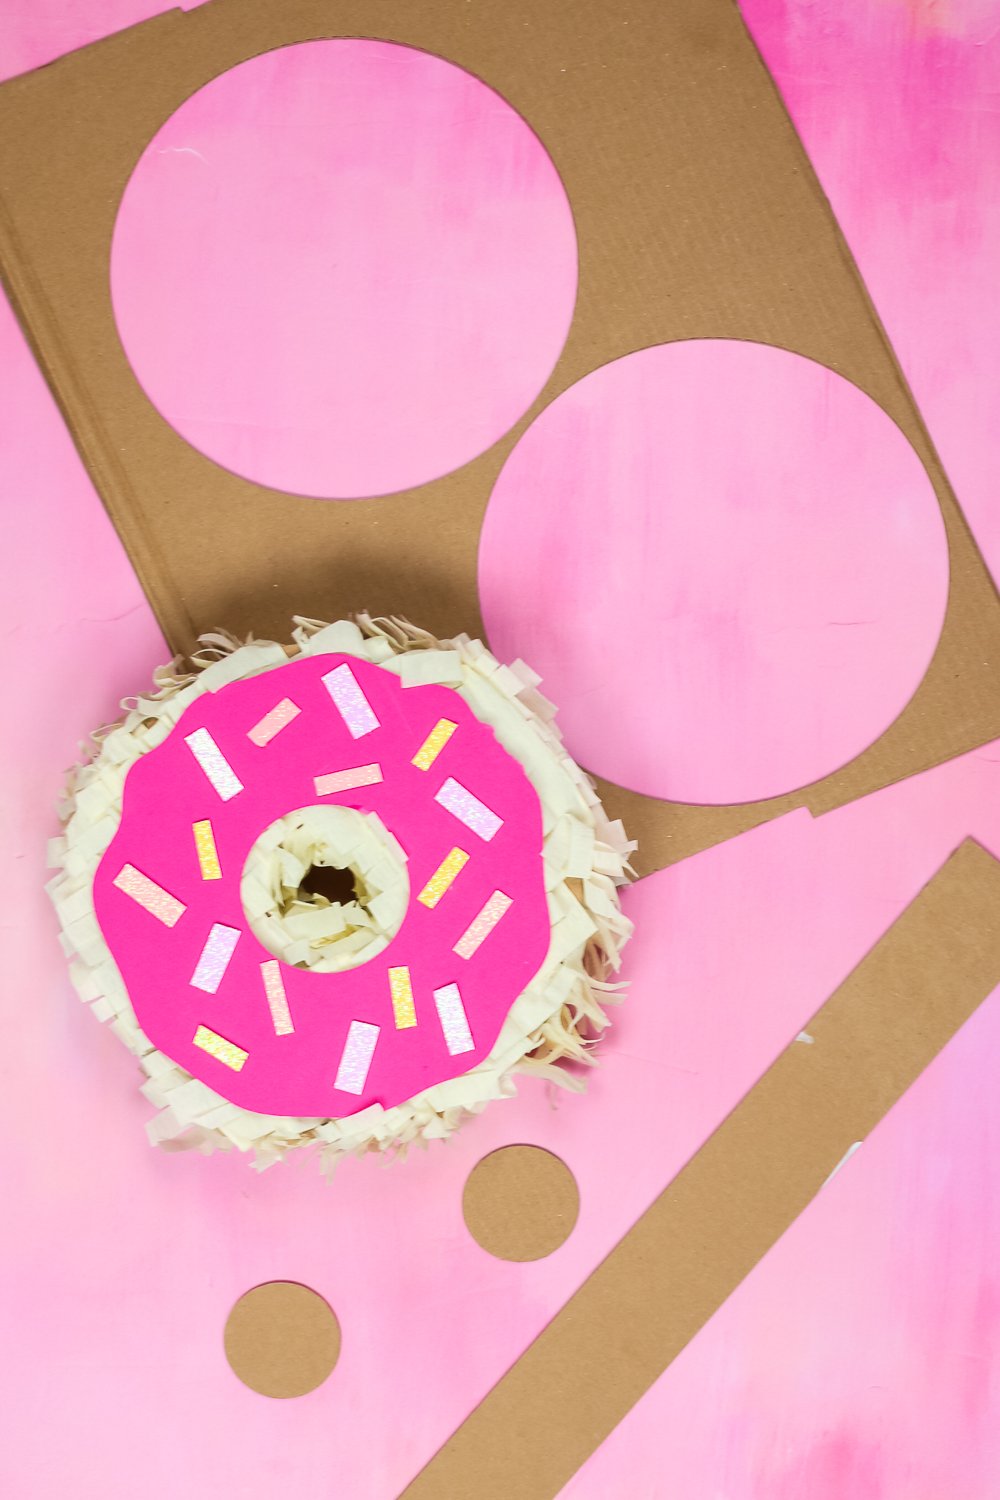 How to cut cardboard with your Cricut machine, donut piñata.